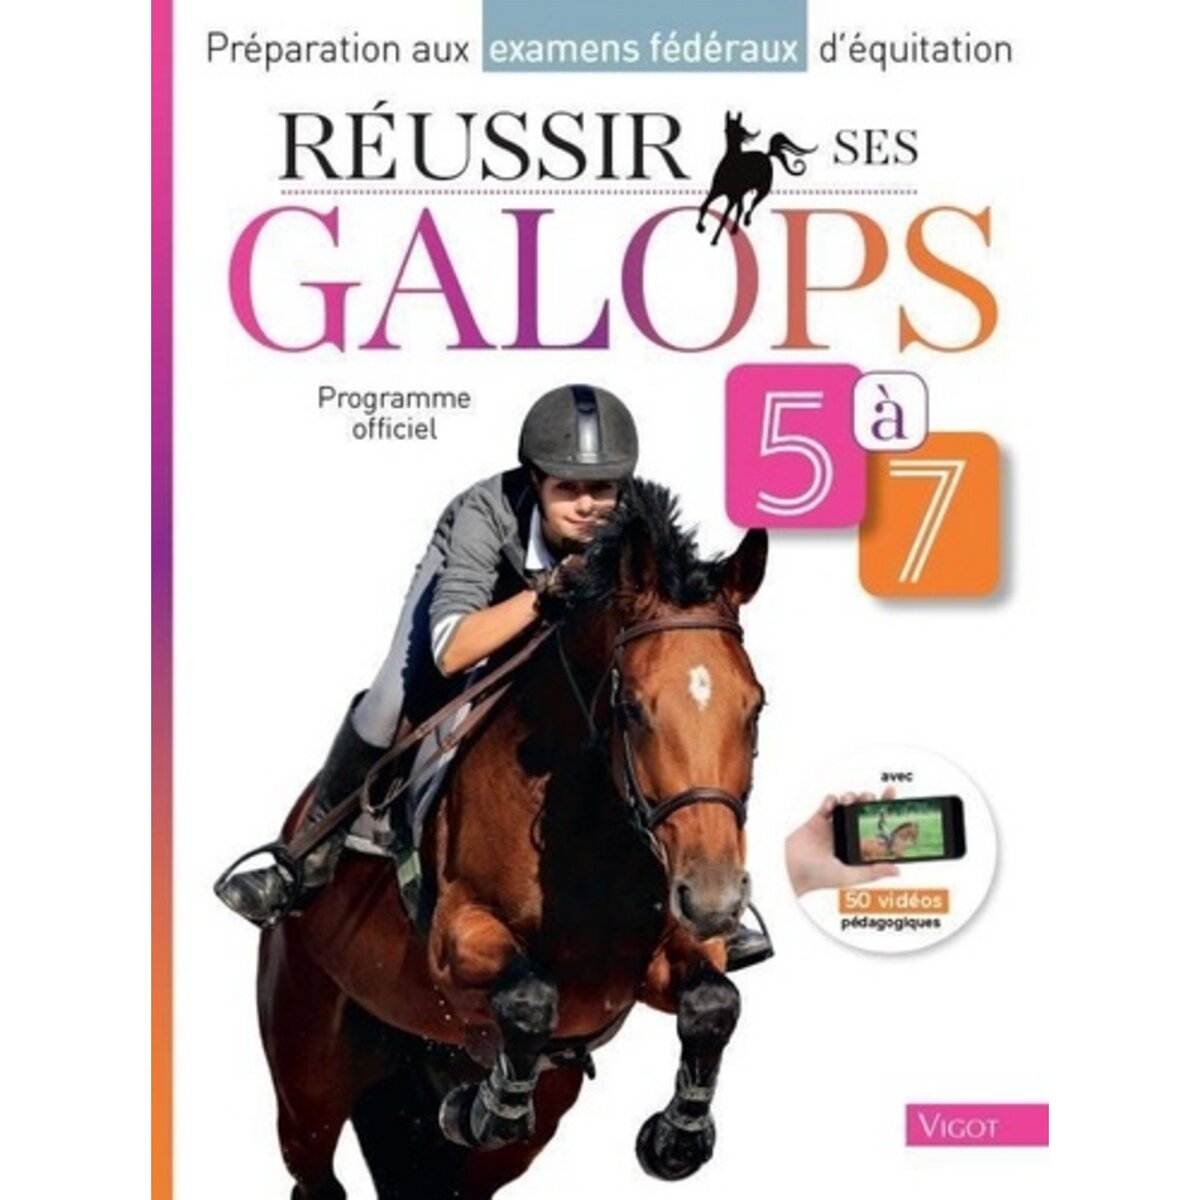  REUSSIR SES GALOPS 5 A 7. PREPARATION AUX EXAMENS FEDERAUX D'EQUITATION, Henry Guillaume